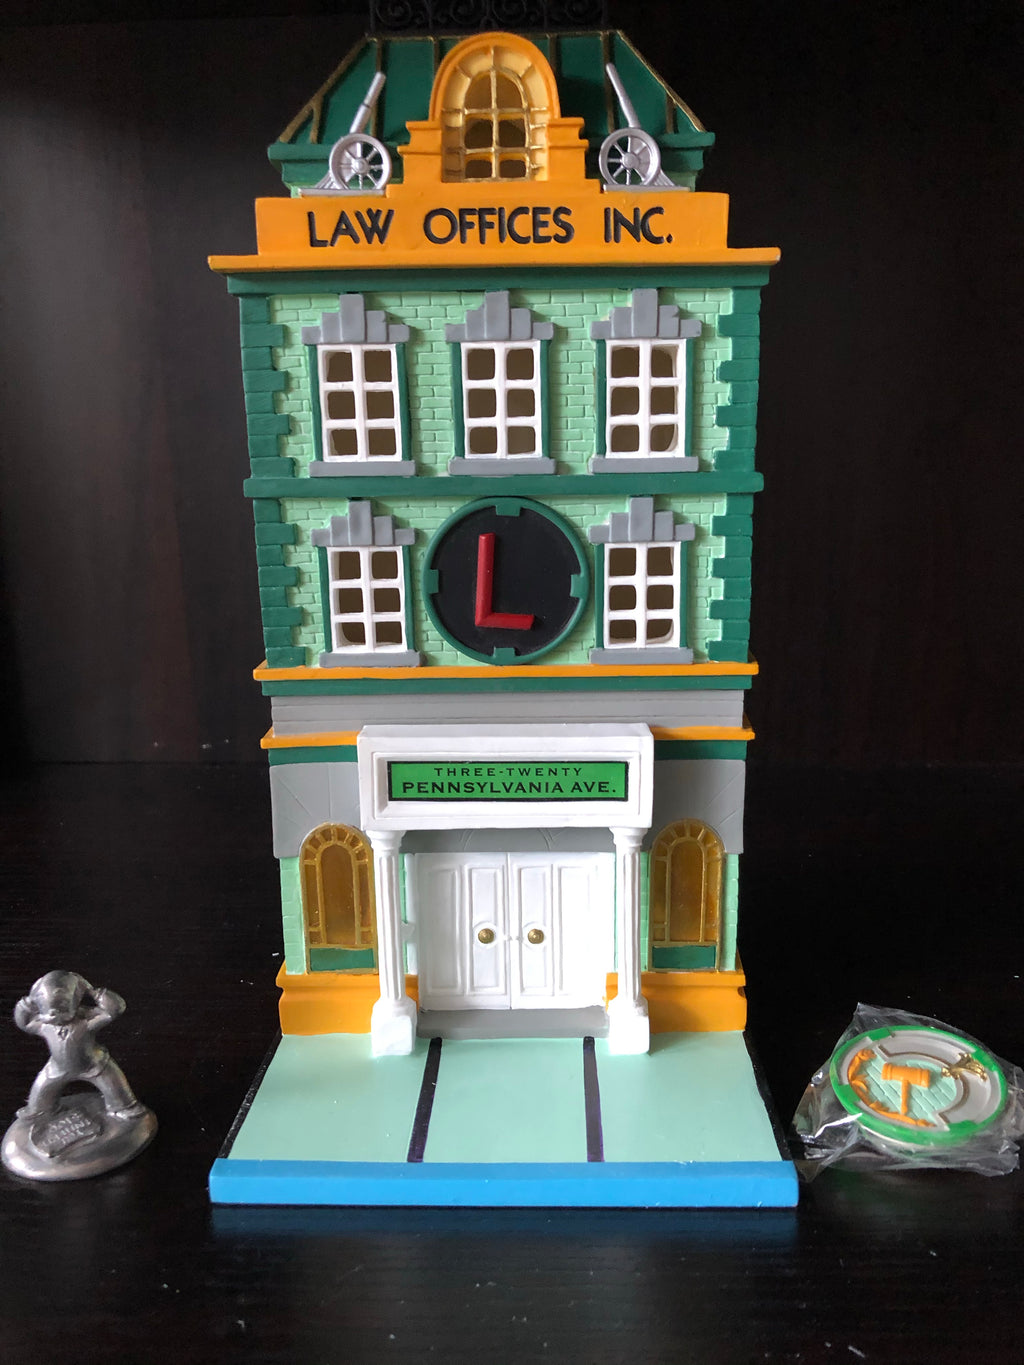 Citylights Monopoly Three-Twenty Pennsylvania Ave "Law Offices Inc."